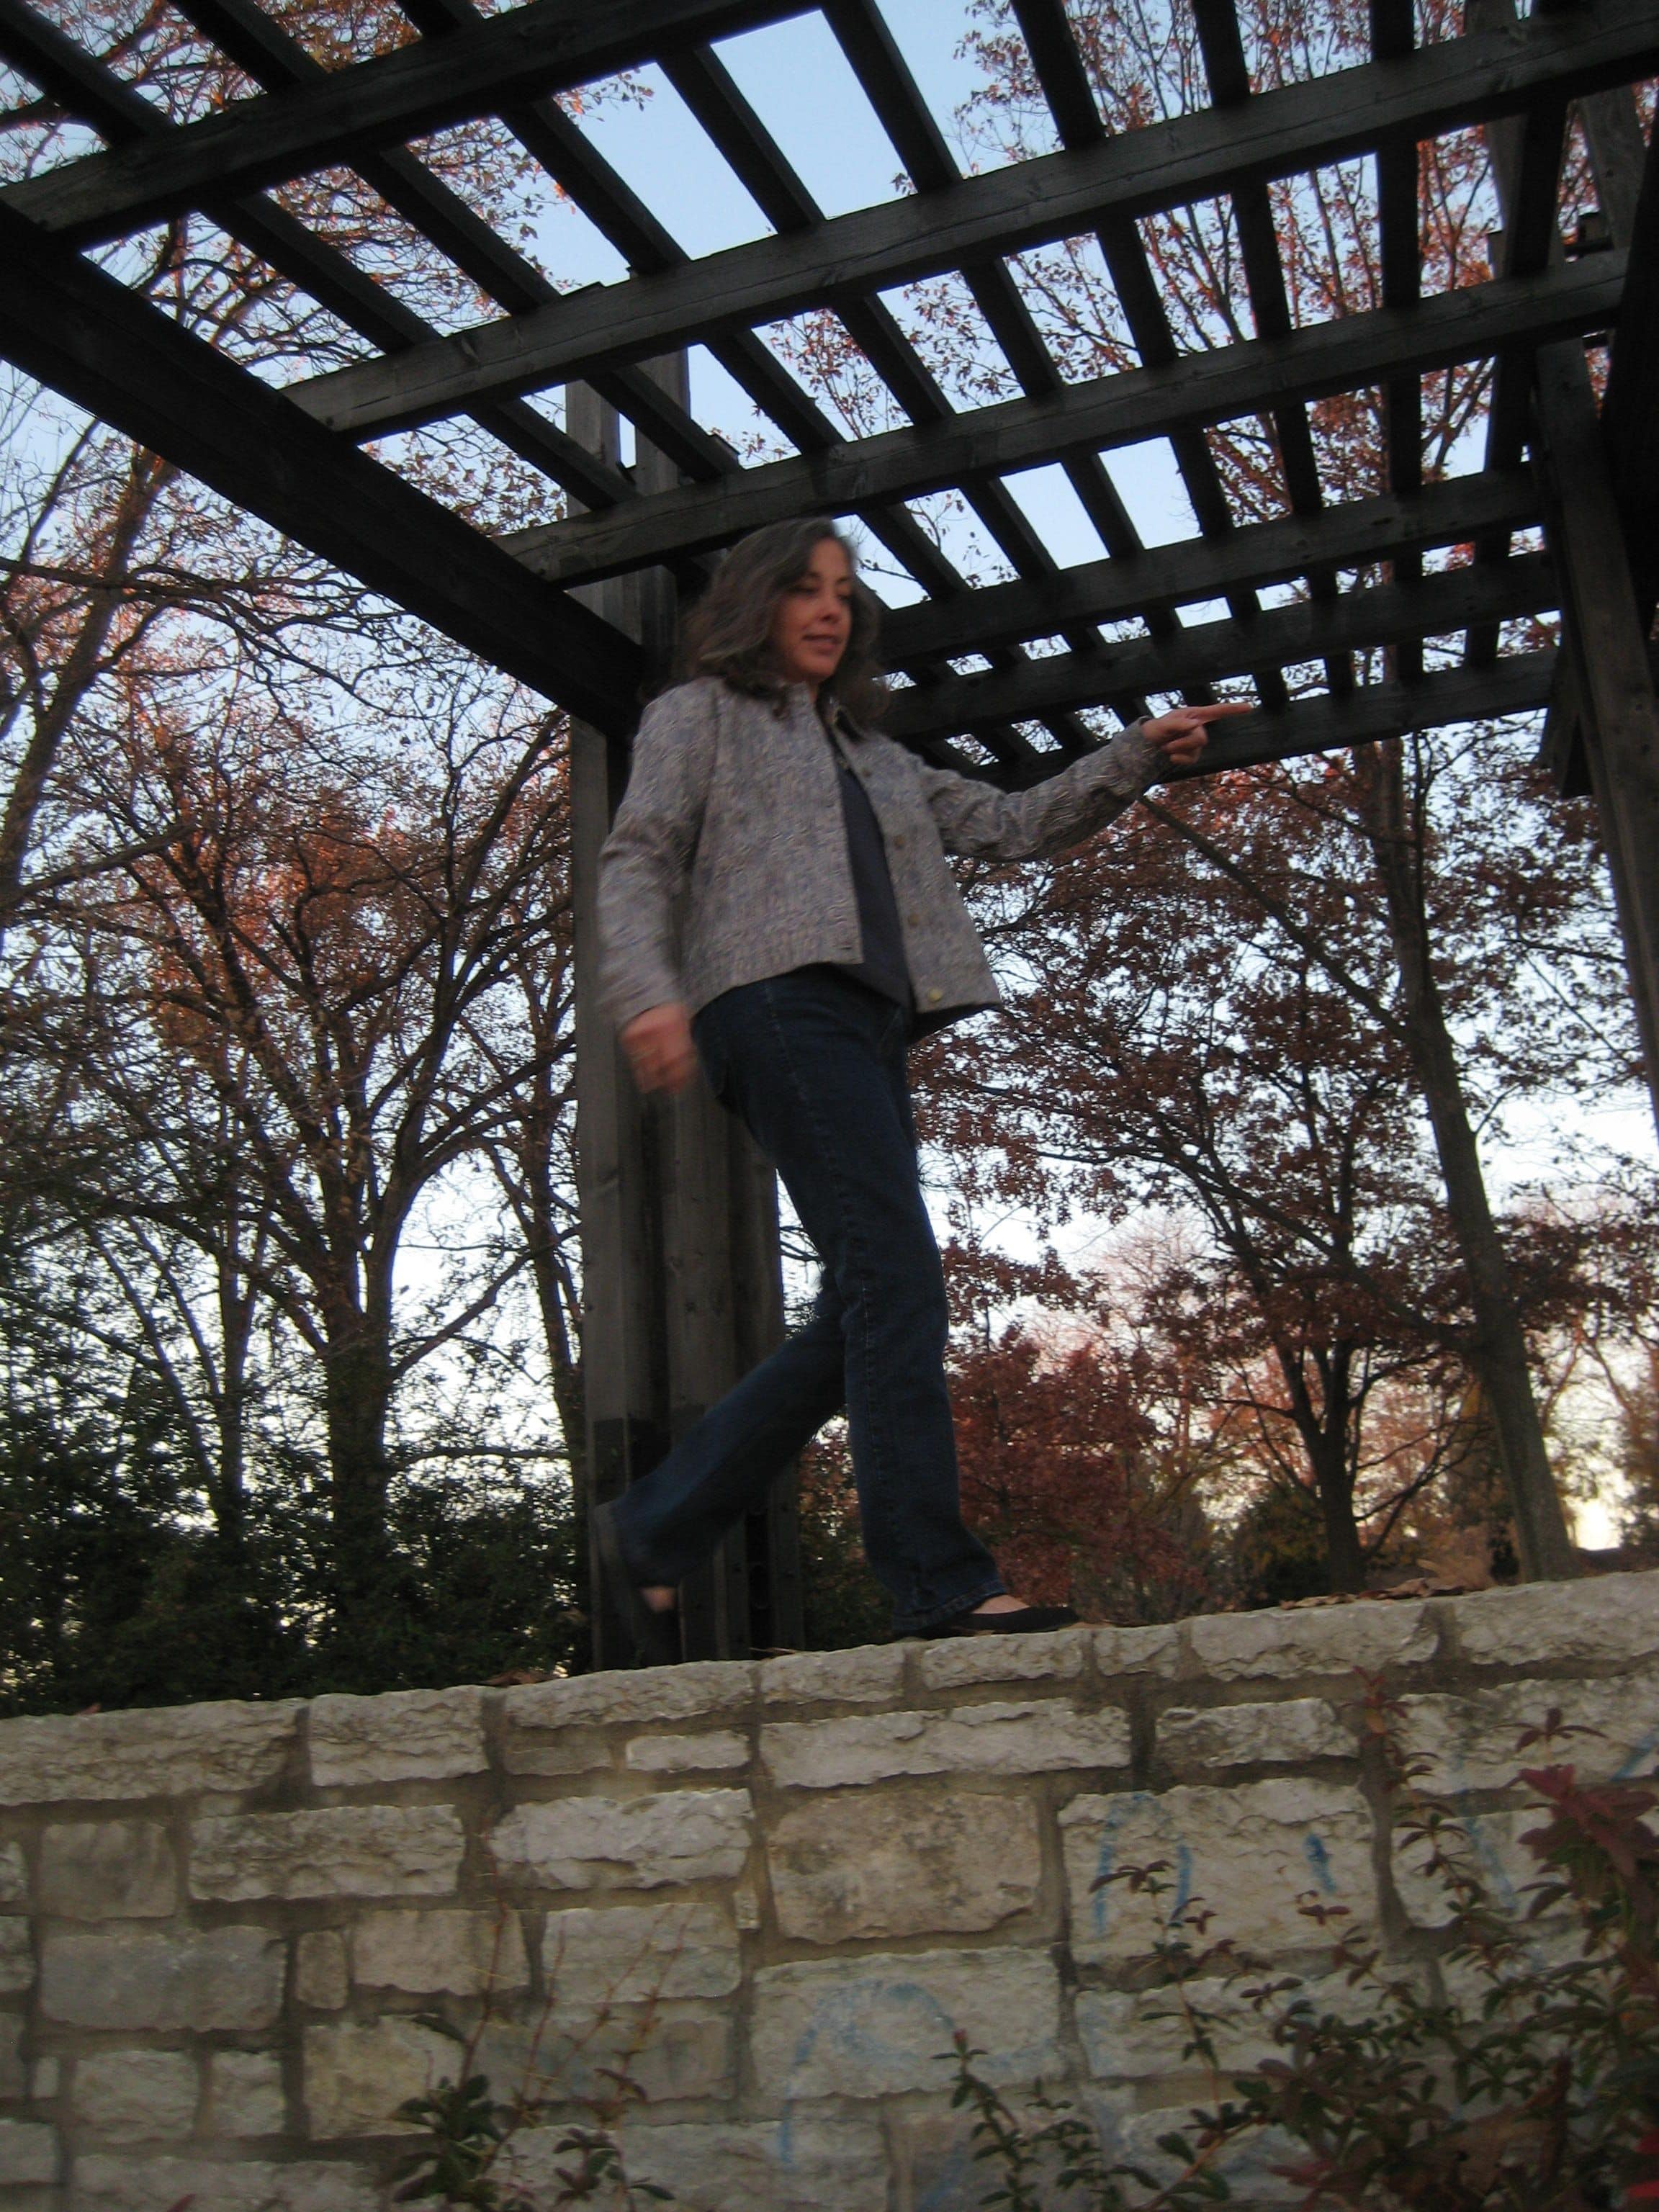 Joanne walking along the top of a brick wall